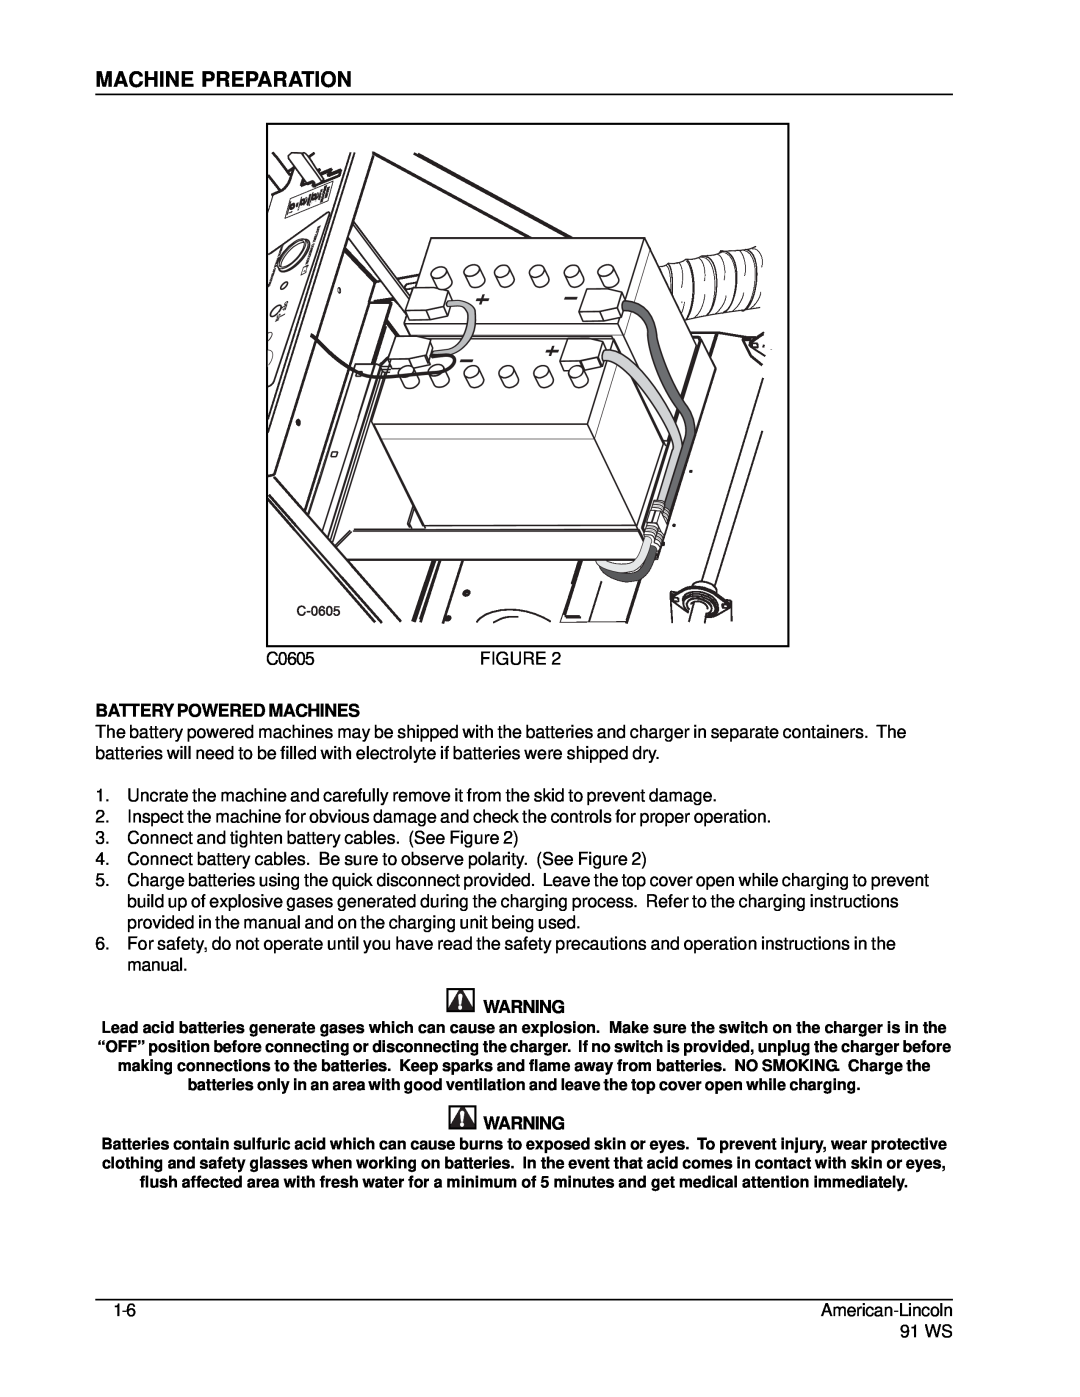 Nilfisk-ALTO 91WS manual Machine Preparation, Battery Powered Machines 